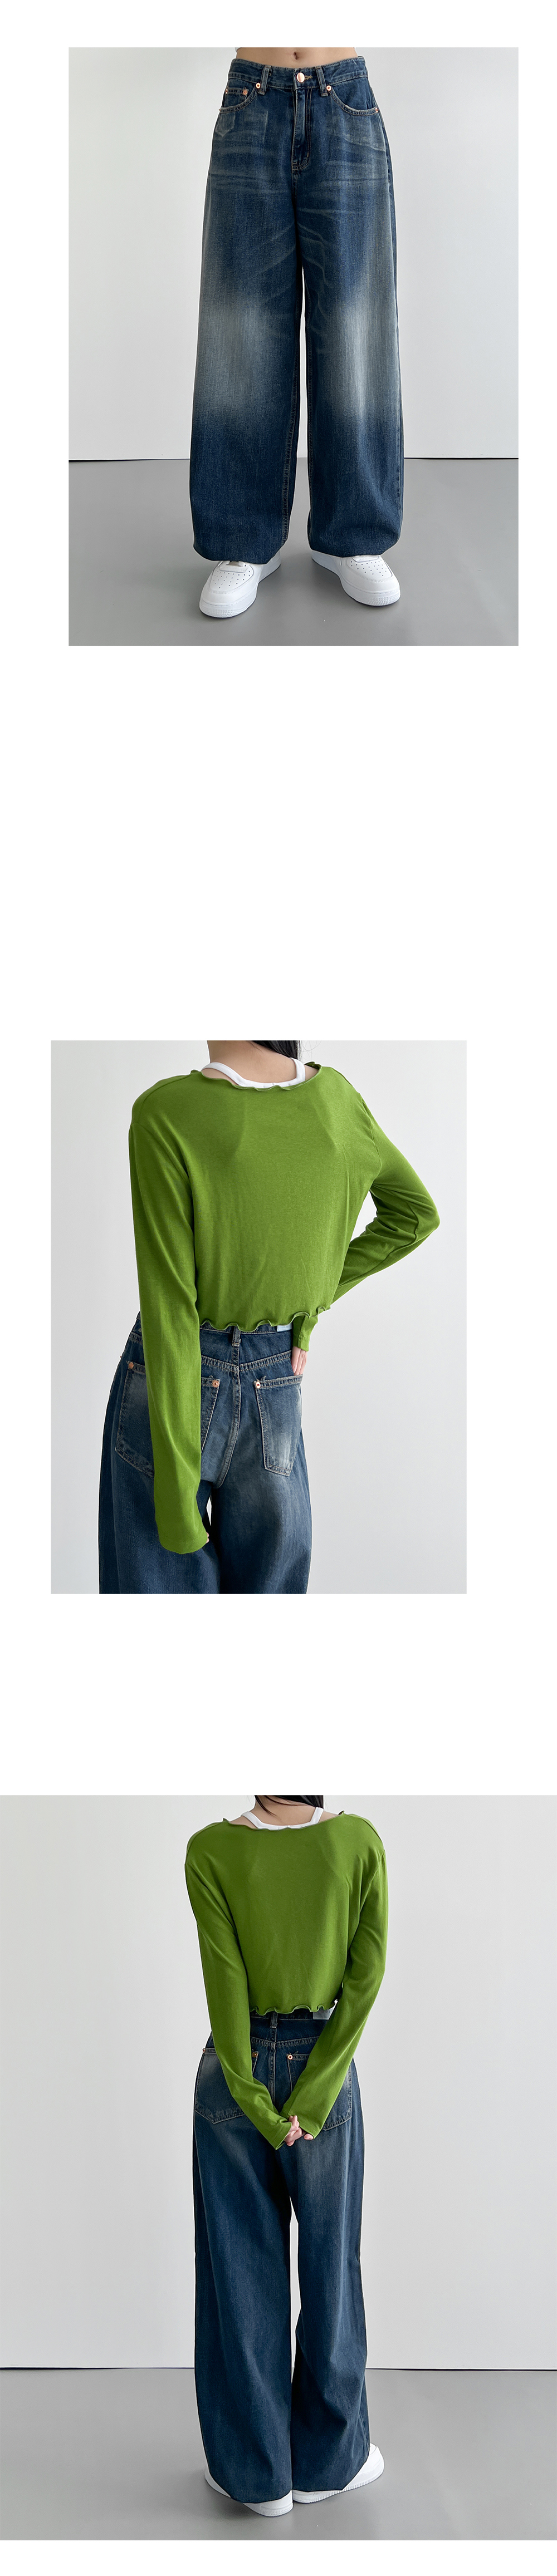 suspenders skirt/pants olive color image-S1L8